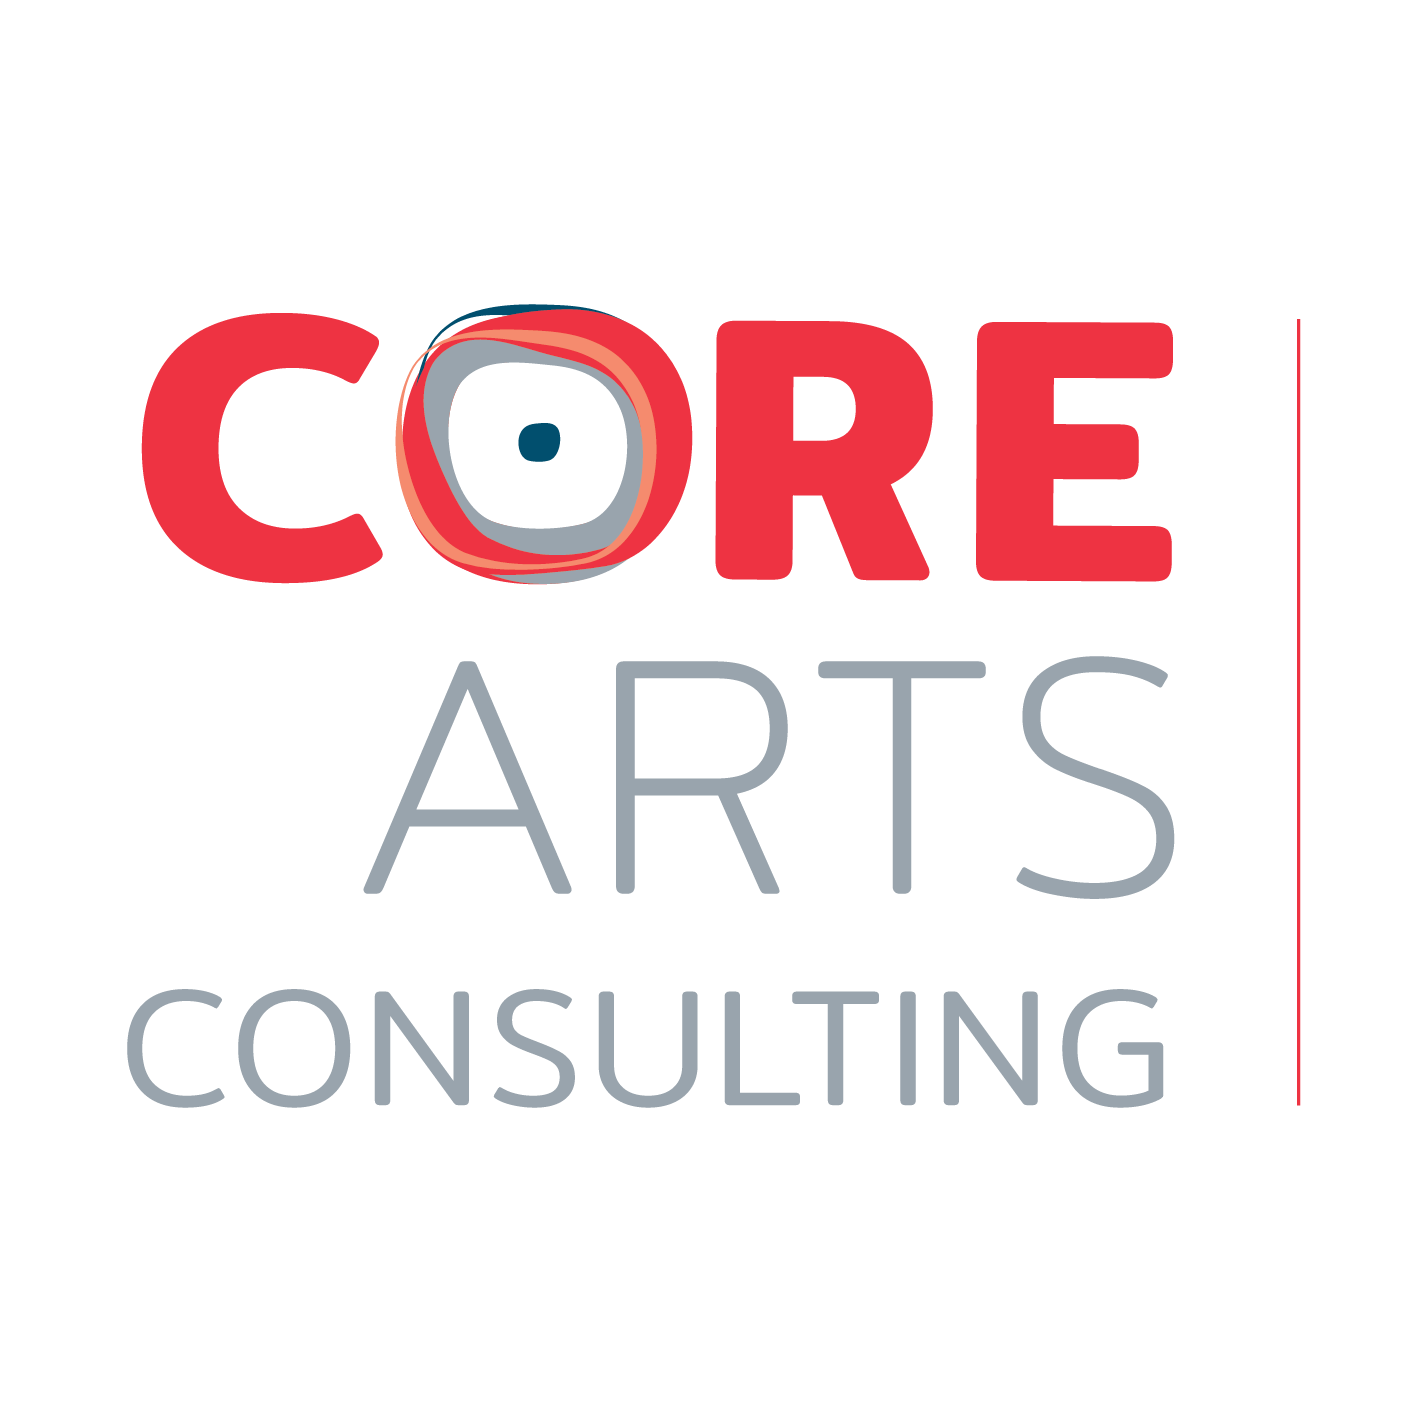 CORE Arts Consulting